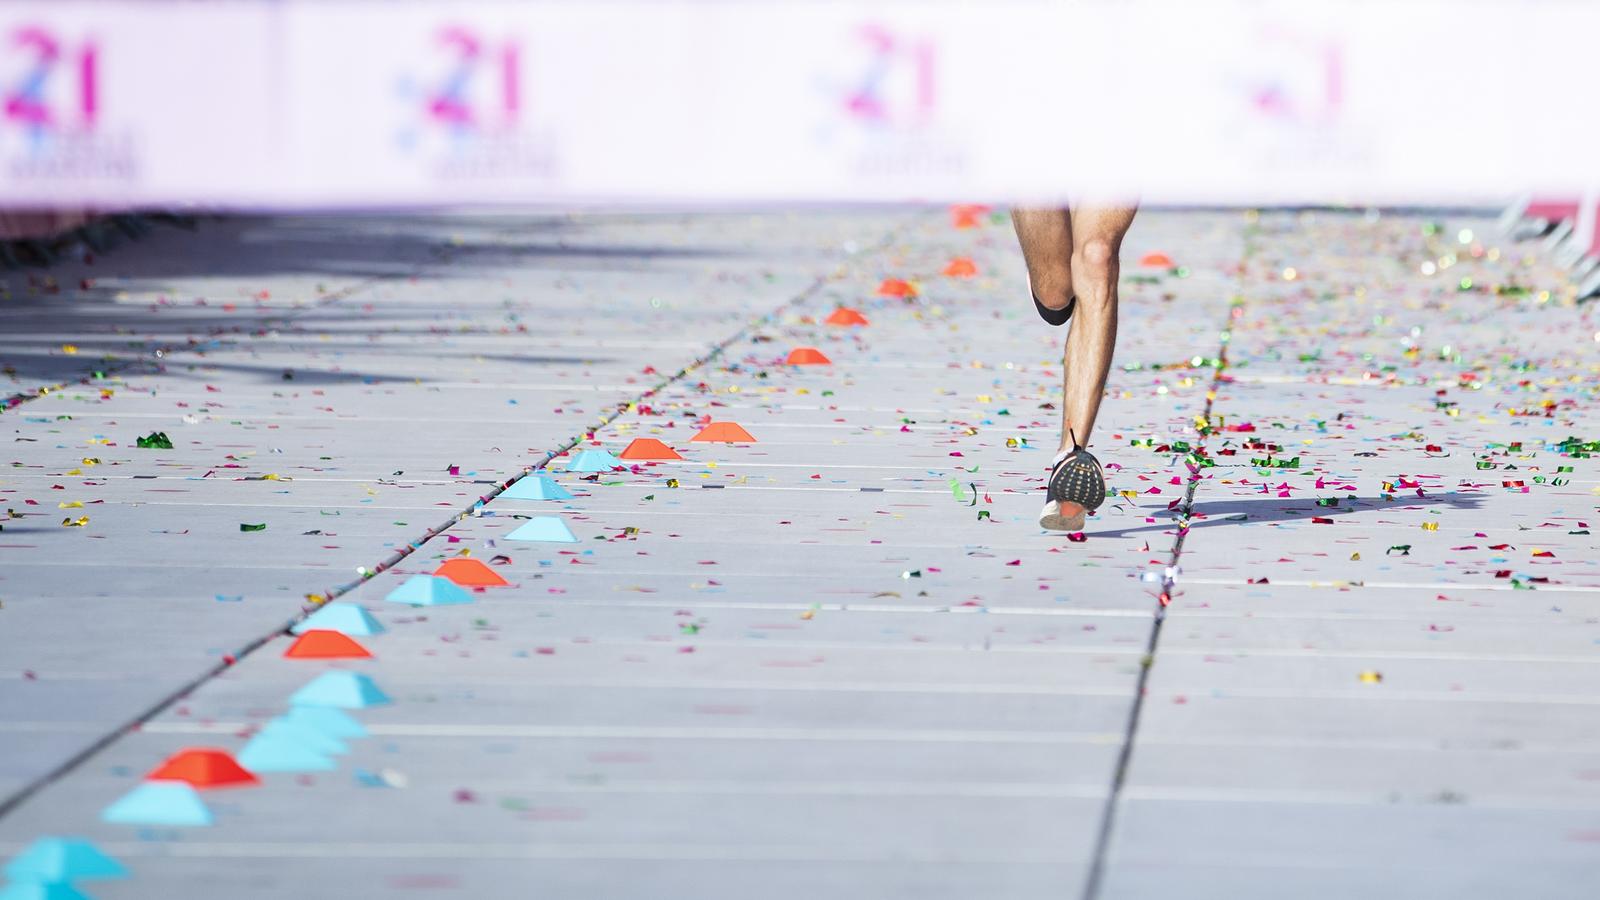 26.09.2021., Split - Ivan Dracar, pobjednik 21. Split maratona u organizaciji Maraton kluba Marjan u Splitu. r"nPhoto: Milan Sabic/PIXSELL